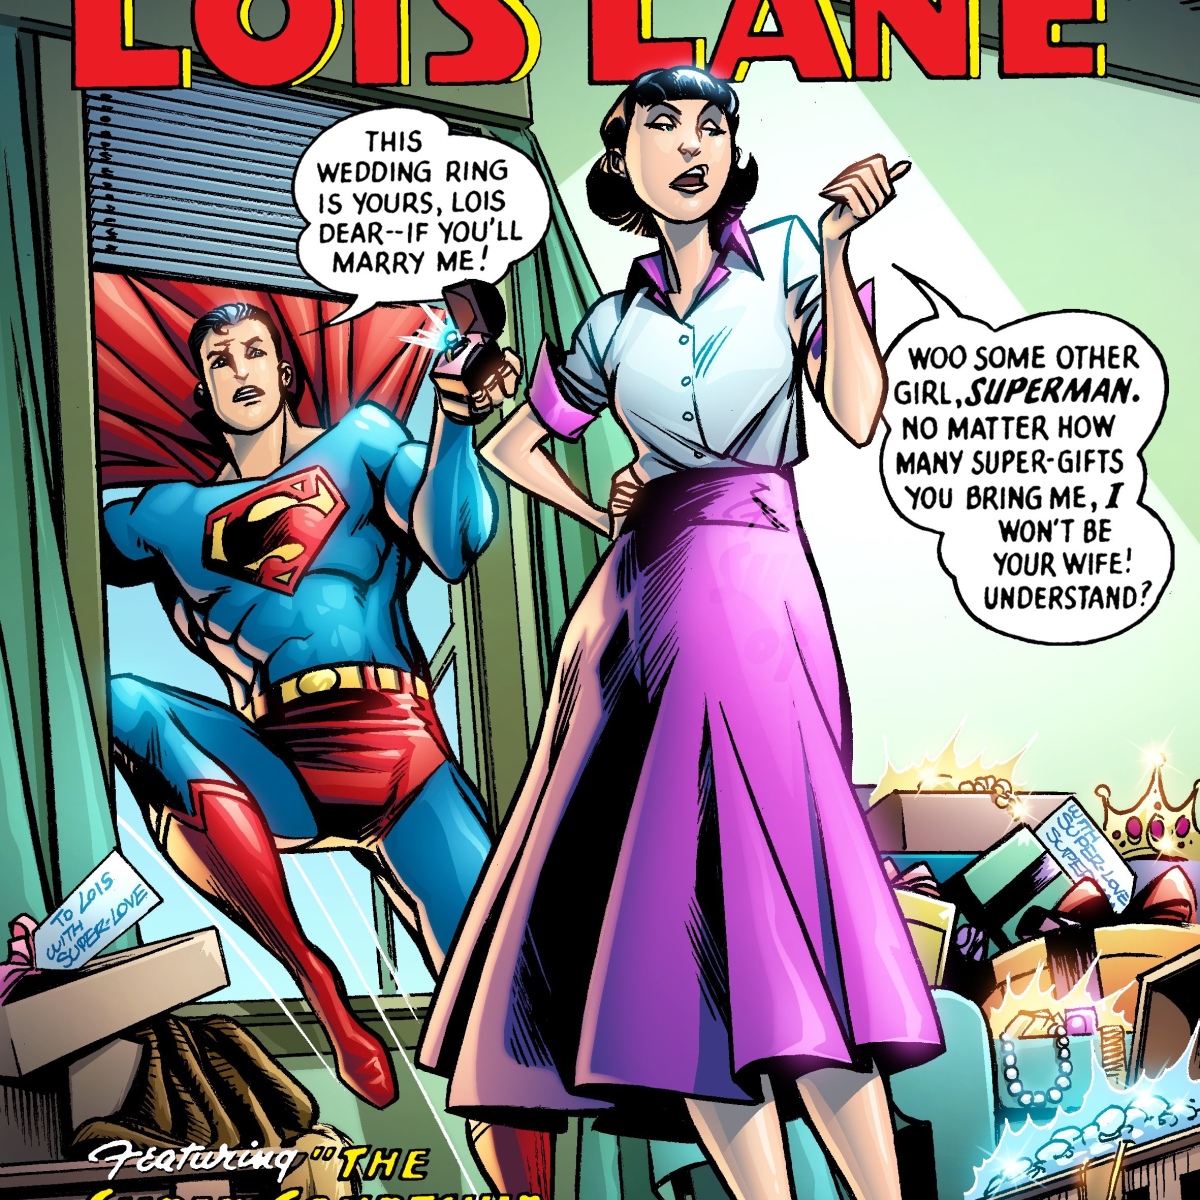 Lois Lane anniversary – Comic cover remake